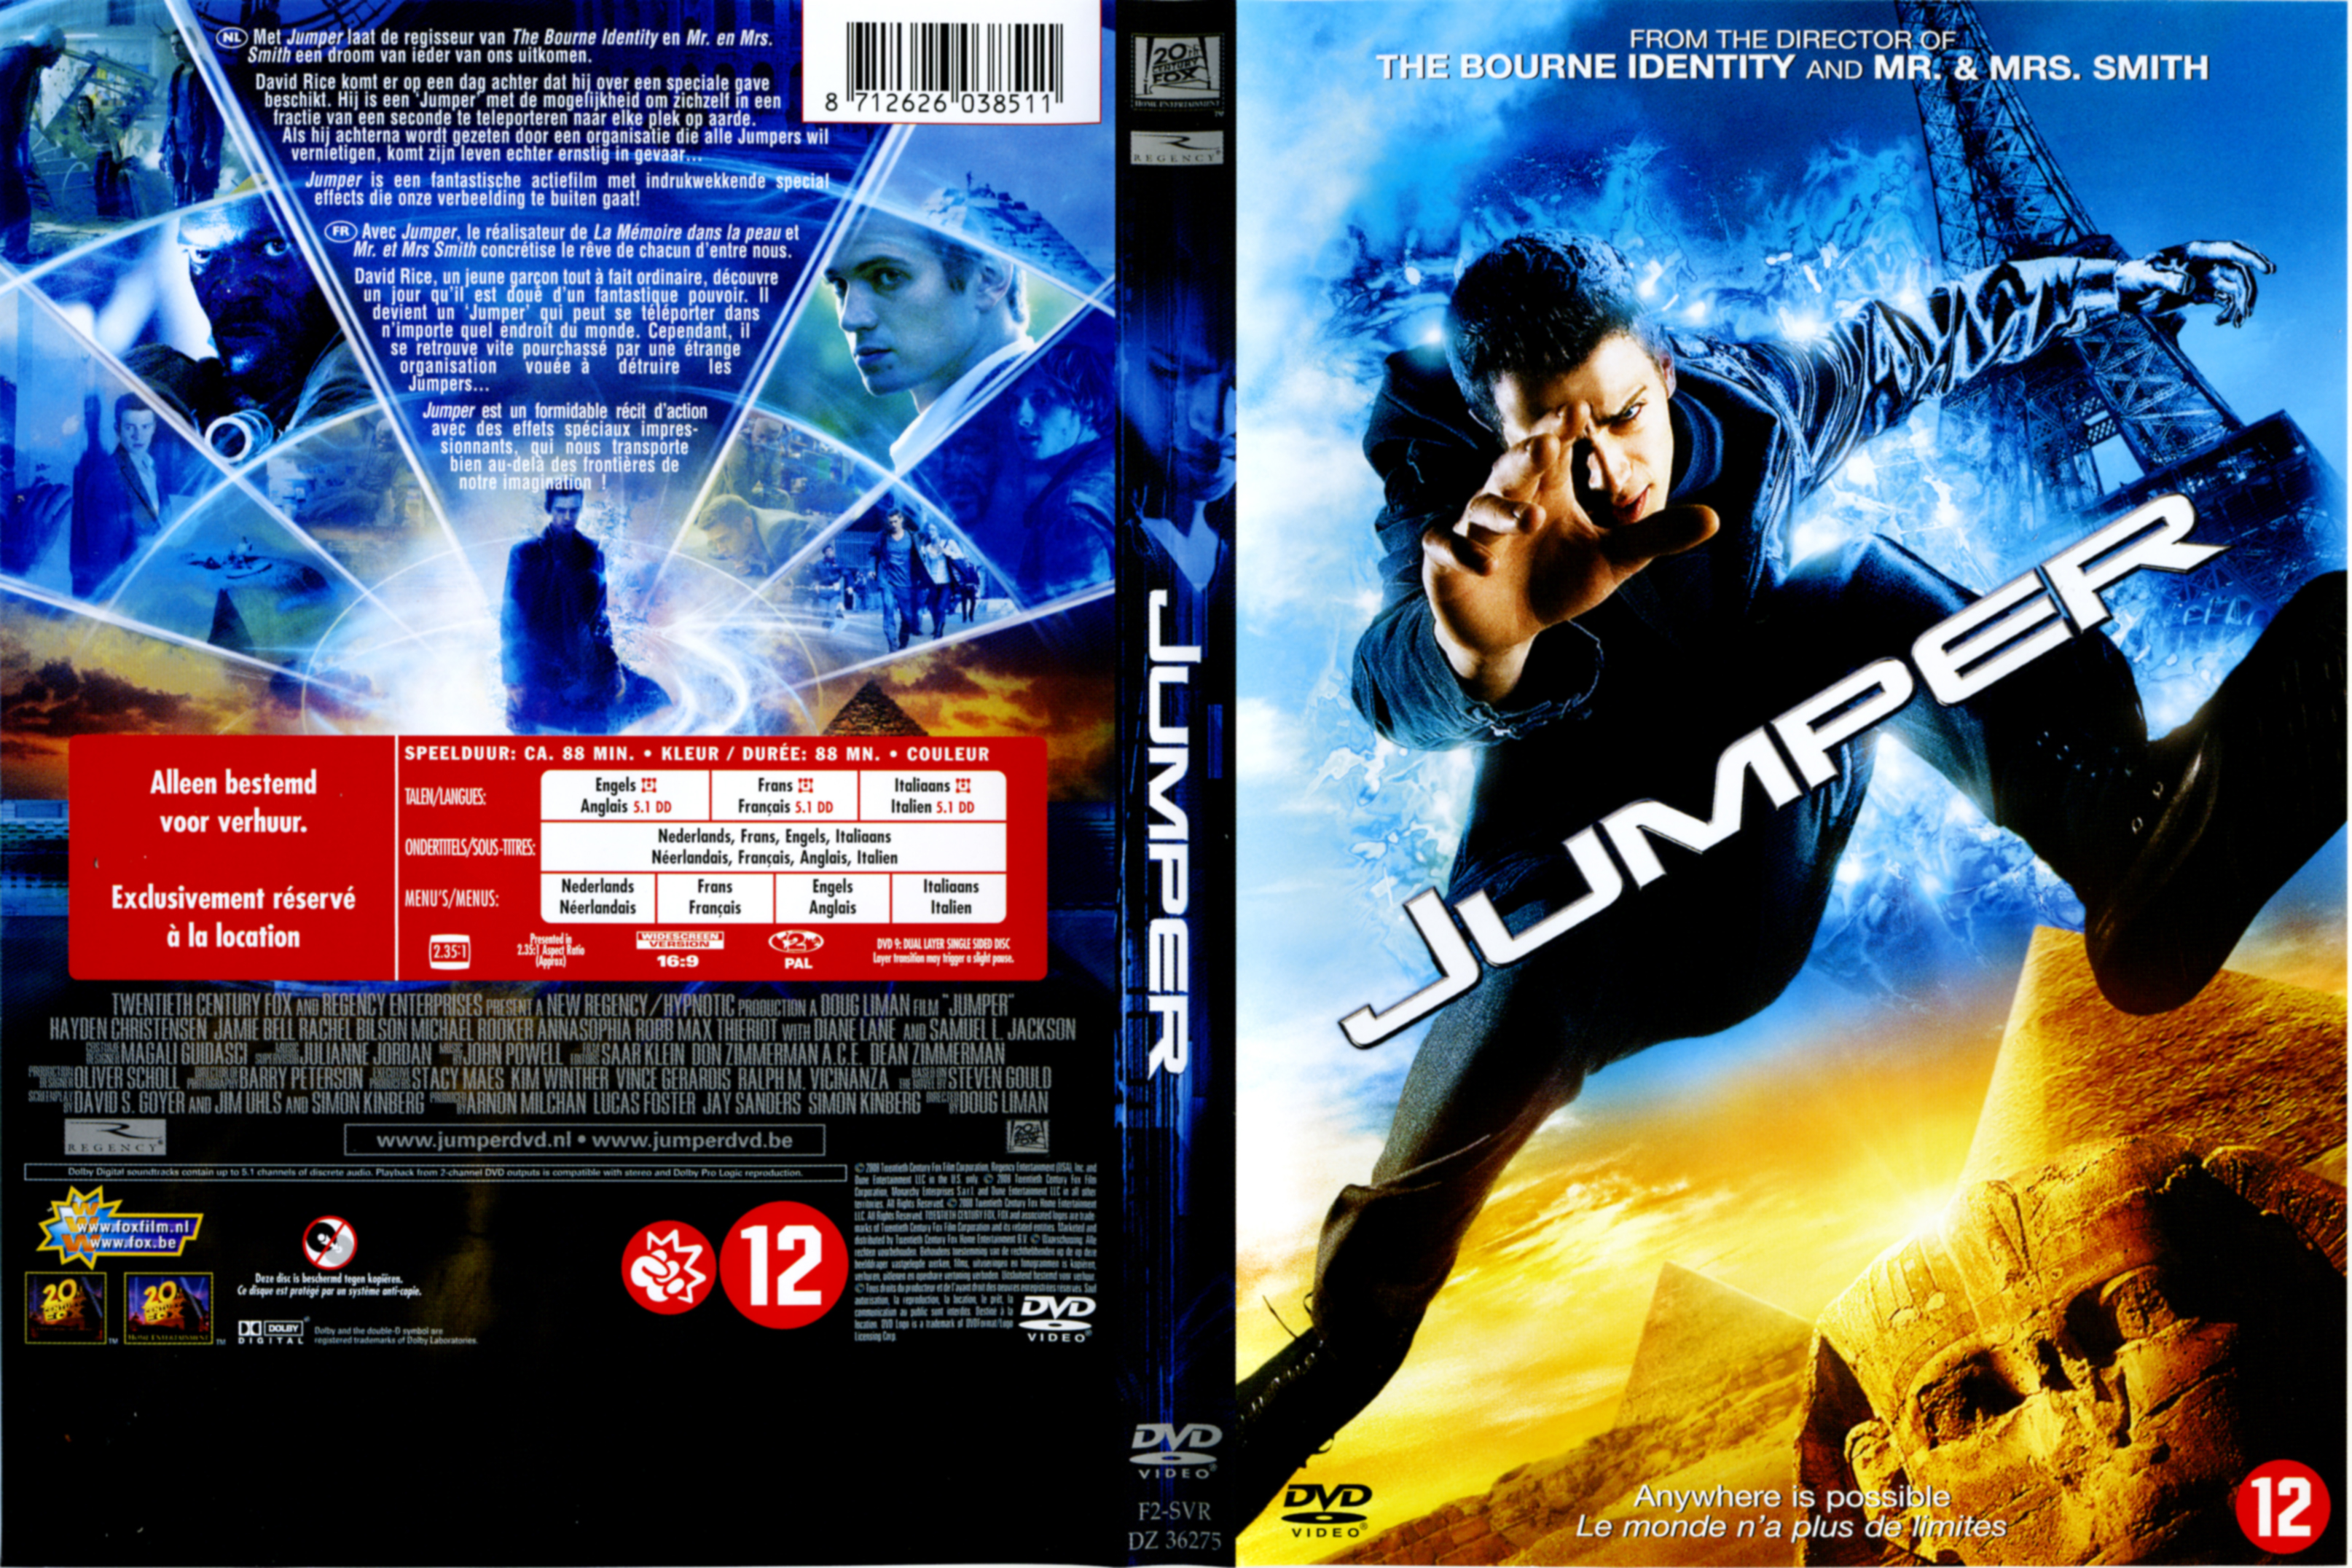 Jaquette DVD Jumper